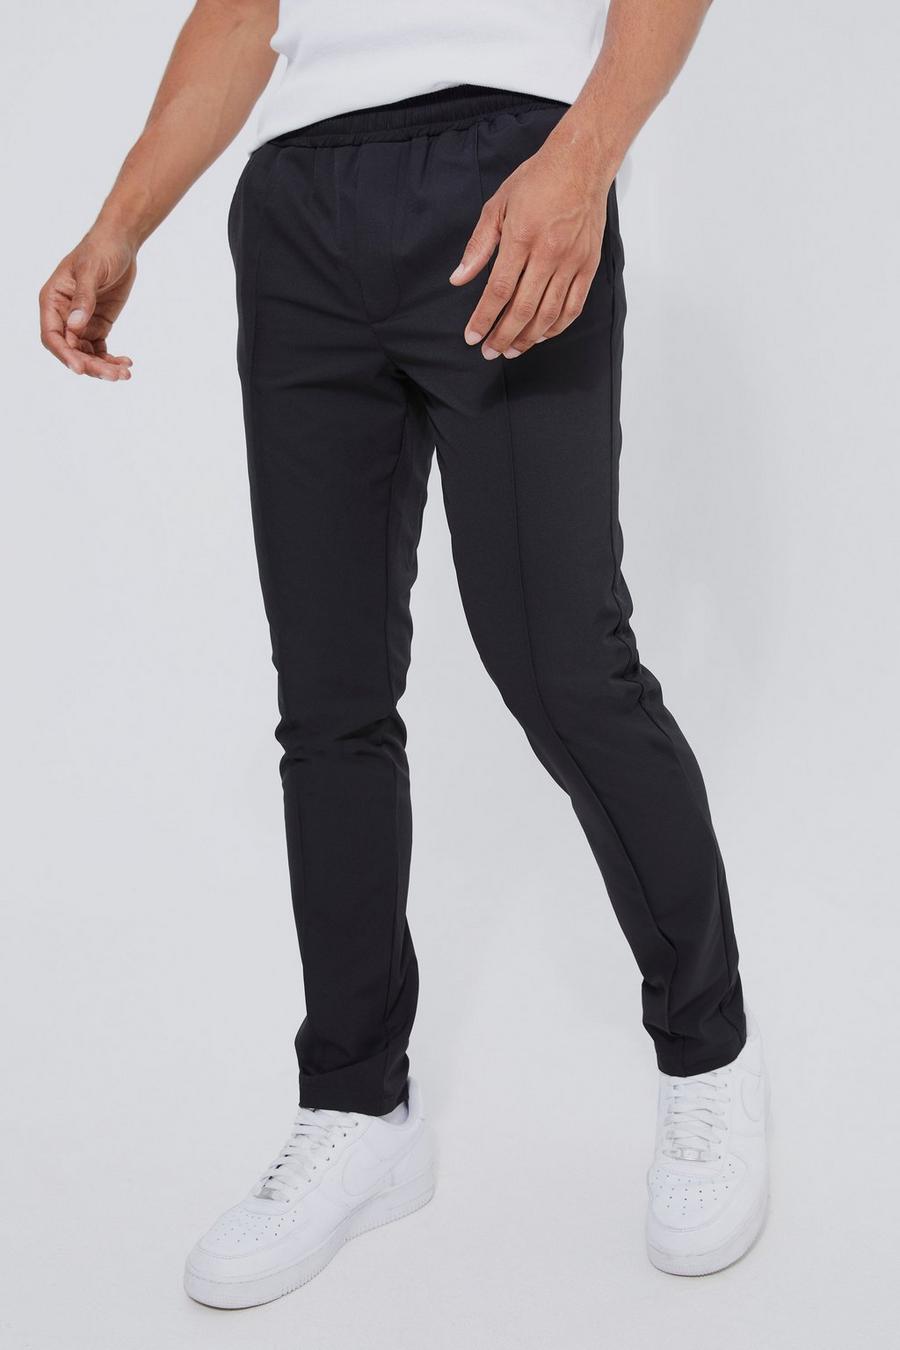 Black svart Elasticated Skinny Pintuck 4 Way Stretch Trousers